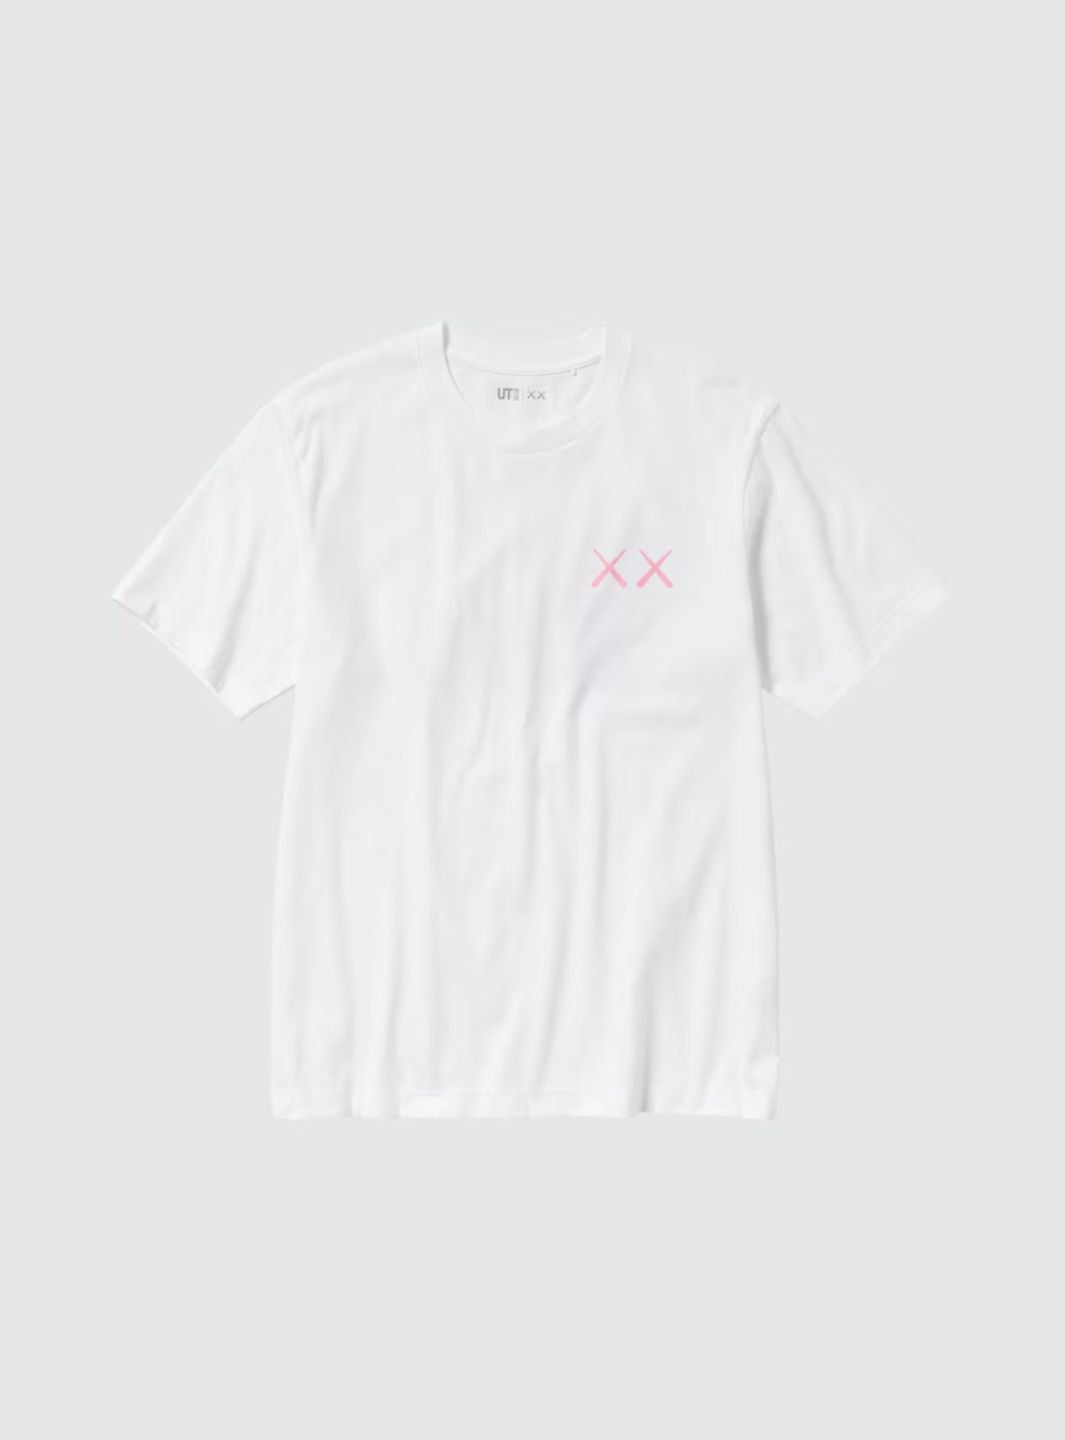 Uniqlo x Kaws T-Shirt White Pink